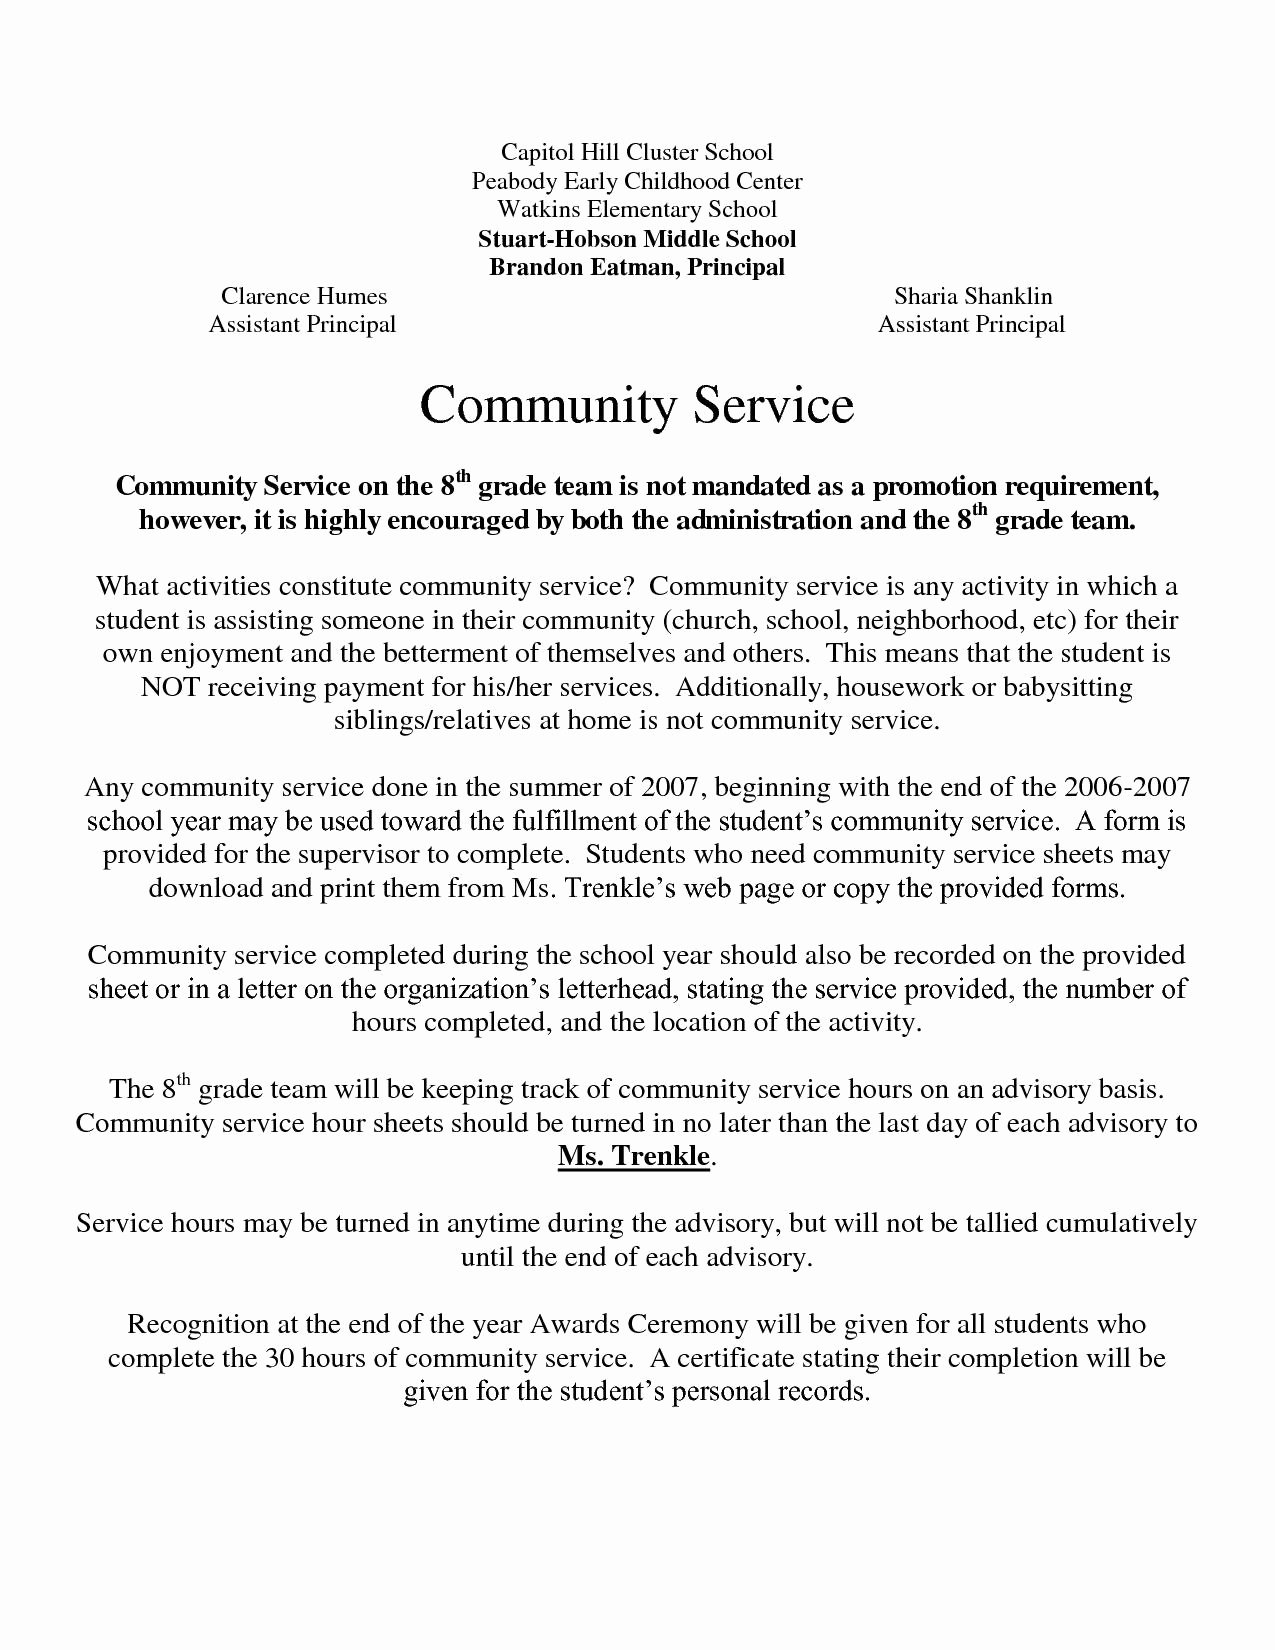 Community Service Letter Template Beautiful Court ordered Munity Service Letter Template Collection